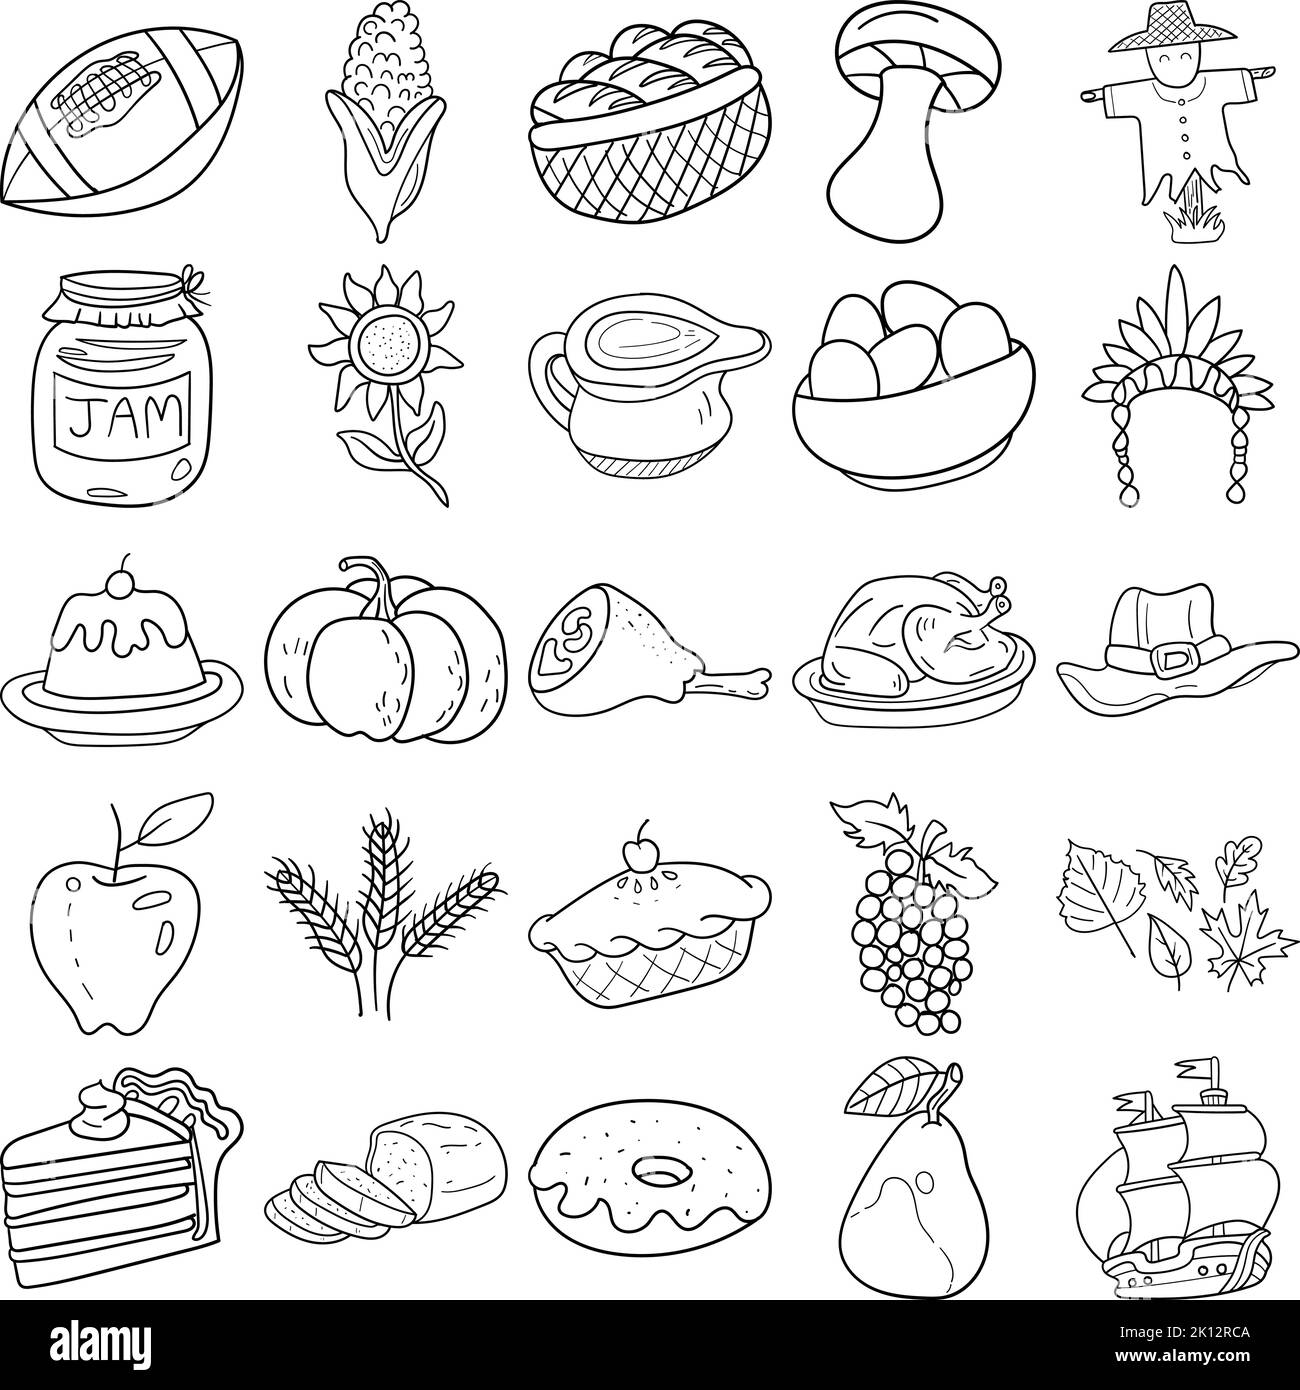 Thanksgiving Hand Drawn Doodle Line Art Outline Set Containing Mayflower, Corn, Pumpkin pie, Pumpkin, Wheat, Gravy, Apple pie, Headpiece, Turkey Stock Vector